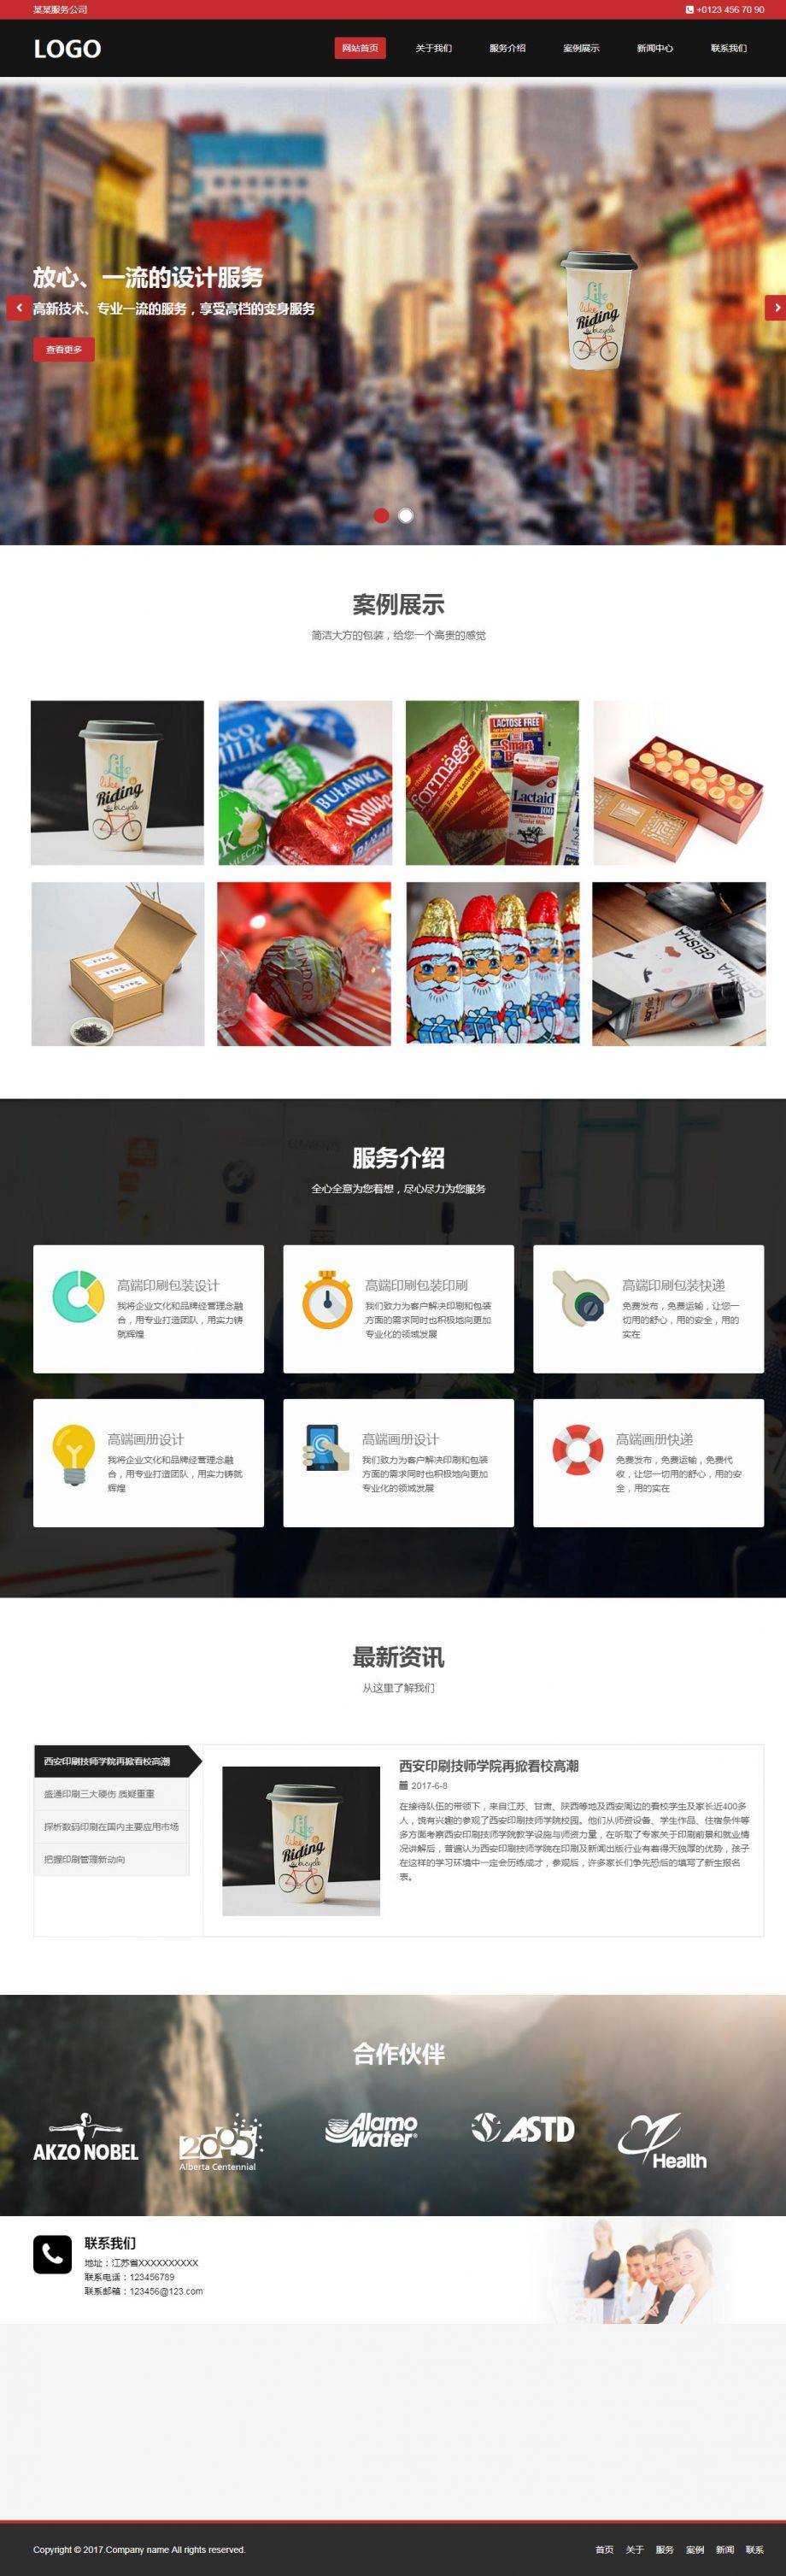 H5产品包装设计创意公司网站模板